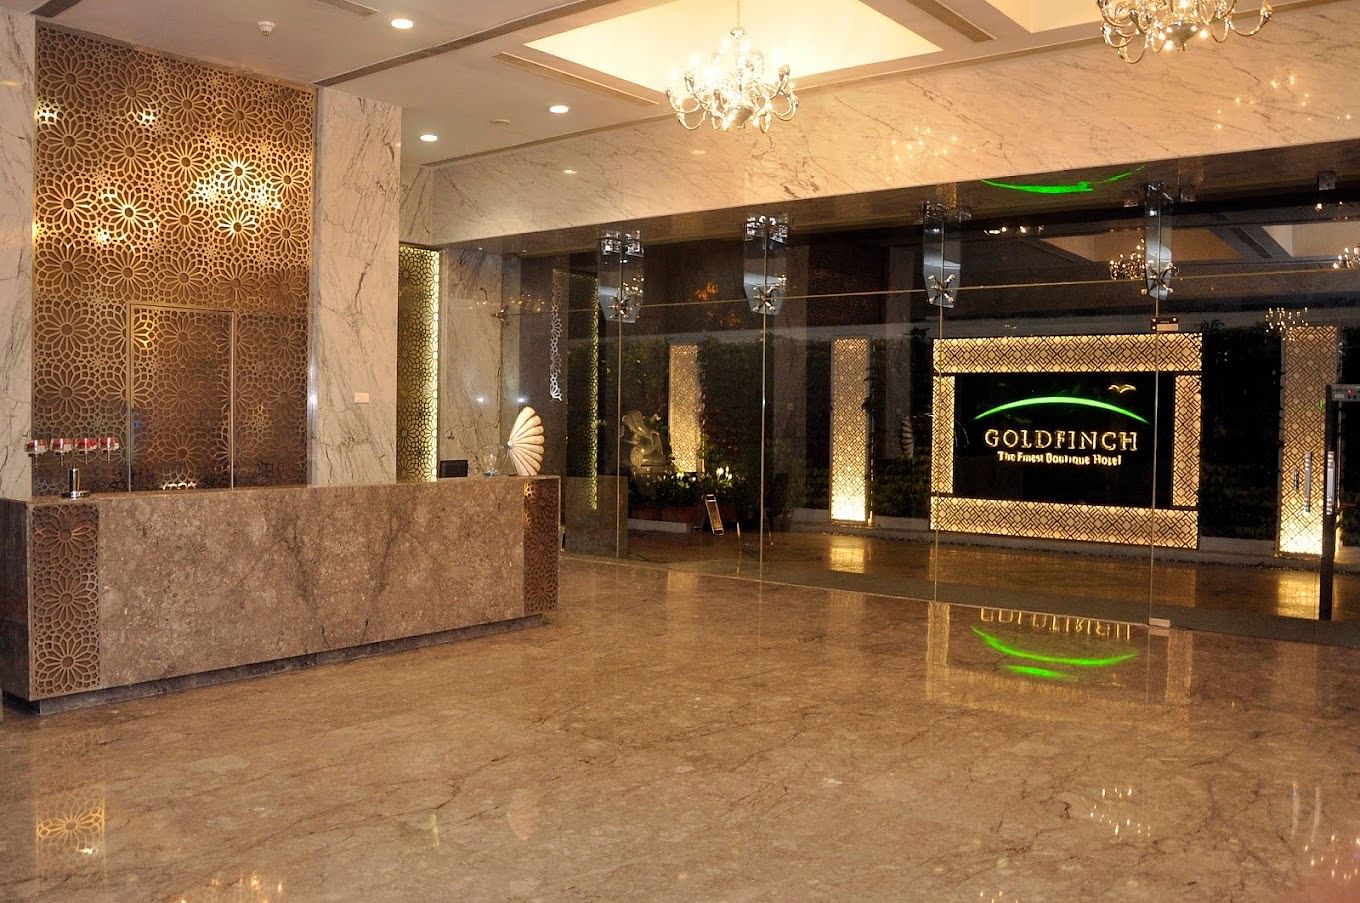 Goldfinch Hotel in Andheri East, Mumbai